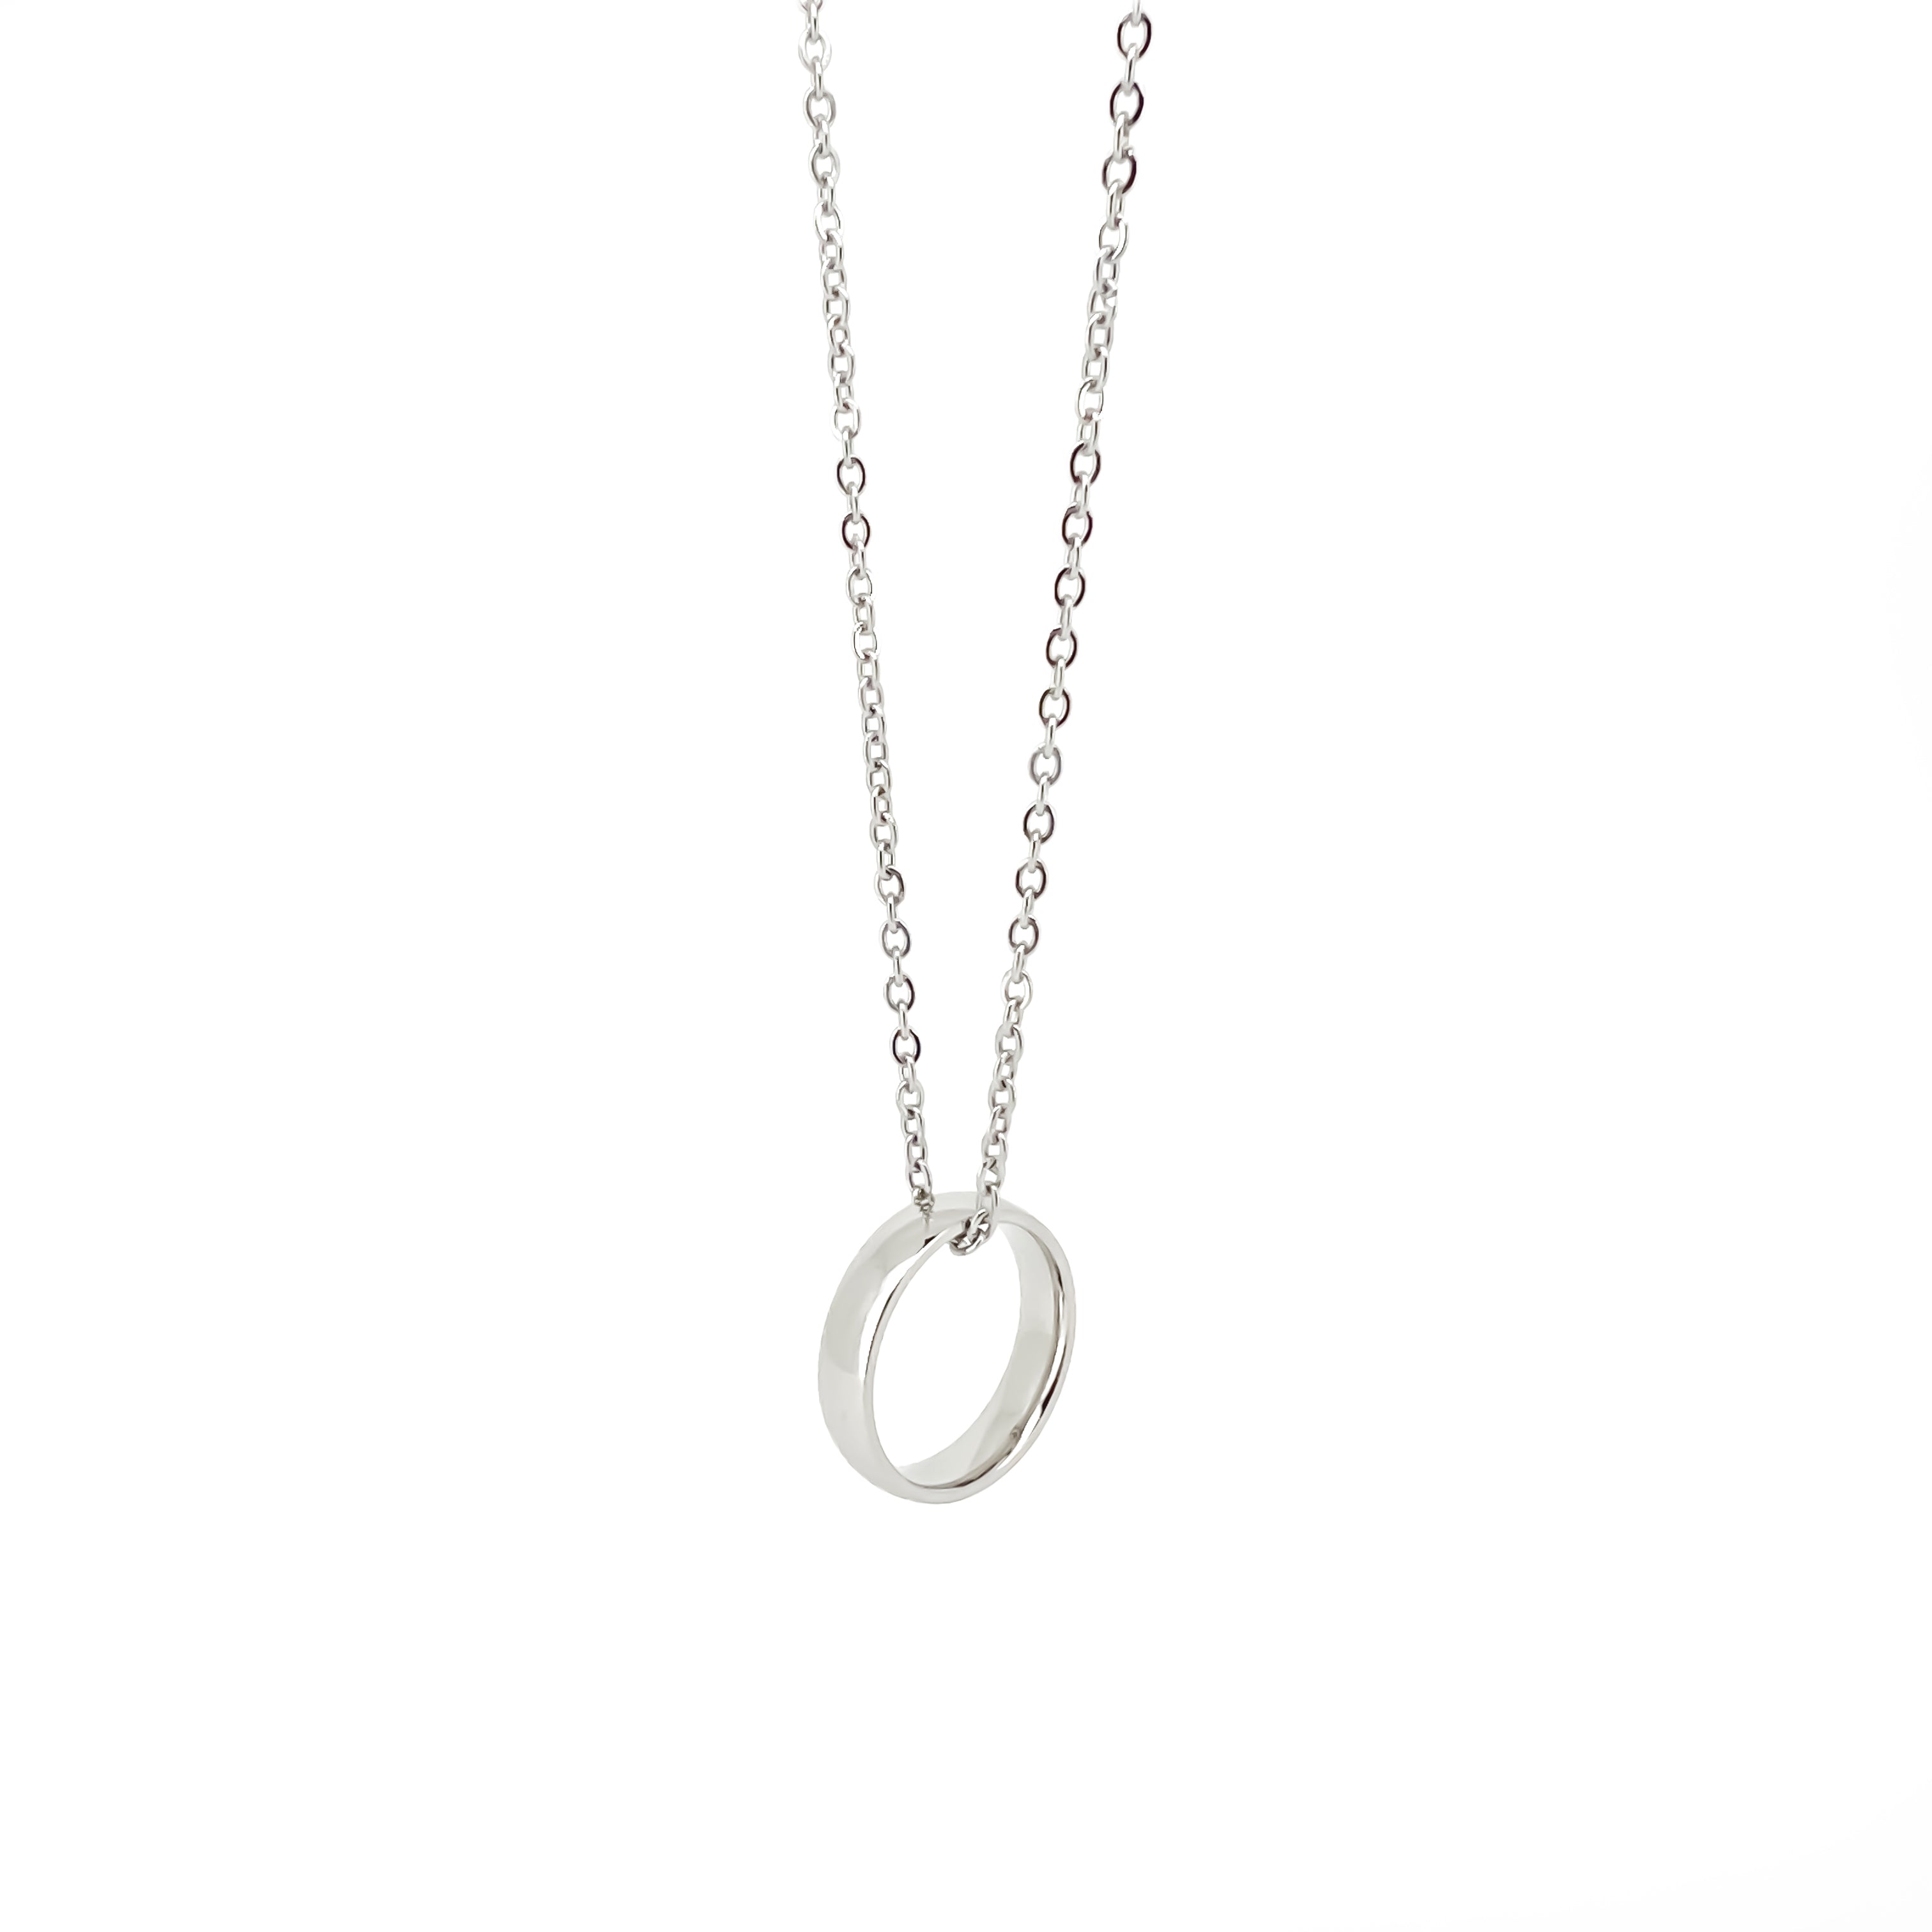 Myles Stainless Steel Necklace with Interlock Pendant